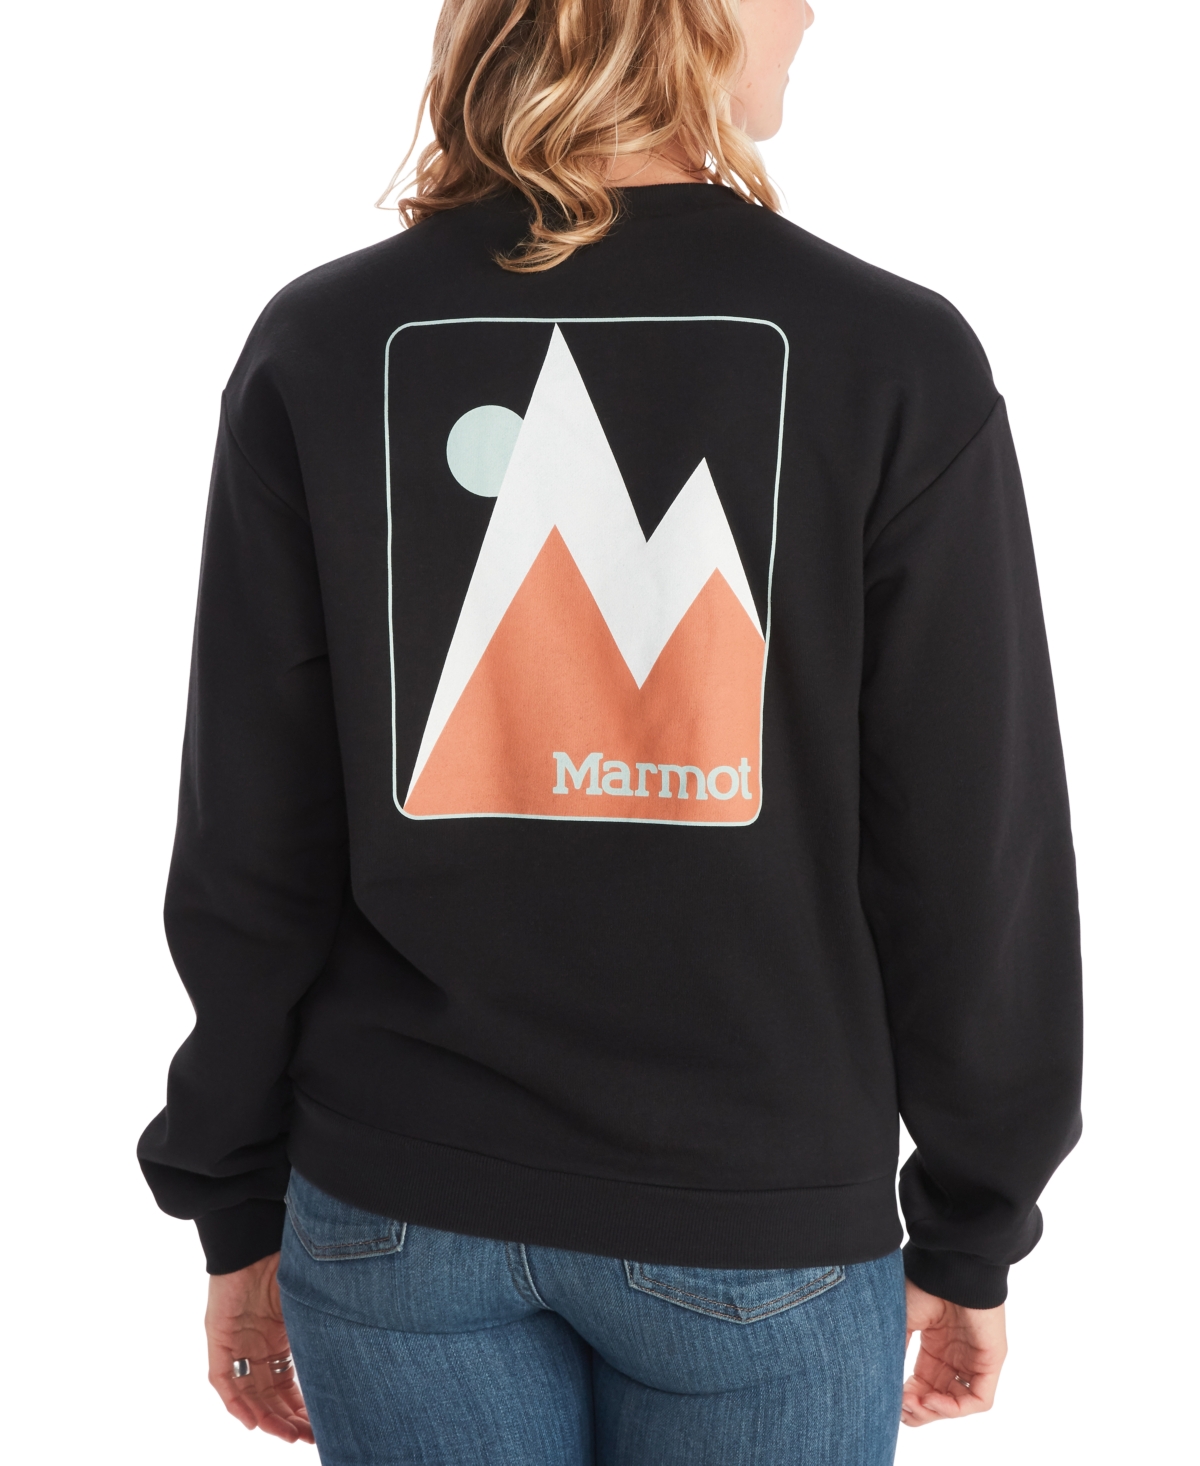  Marmot Women's Twin Peak Crewneck Sweatshirt